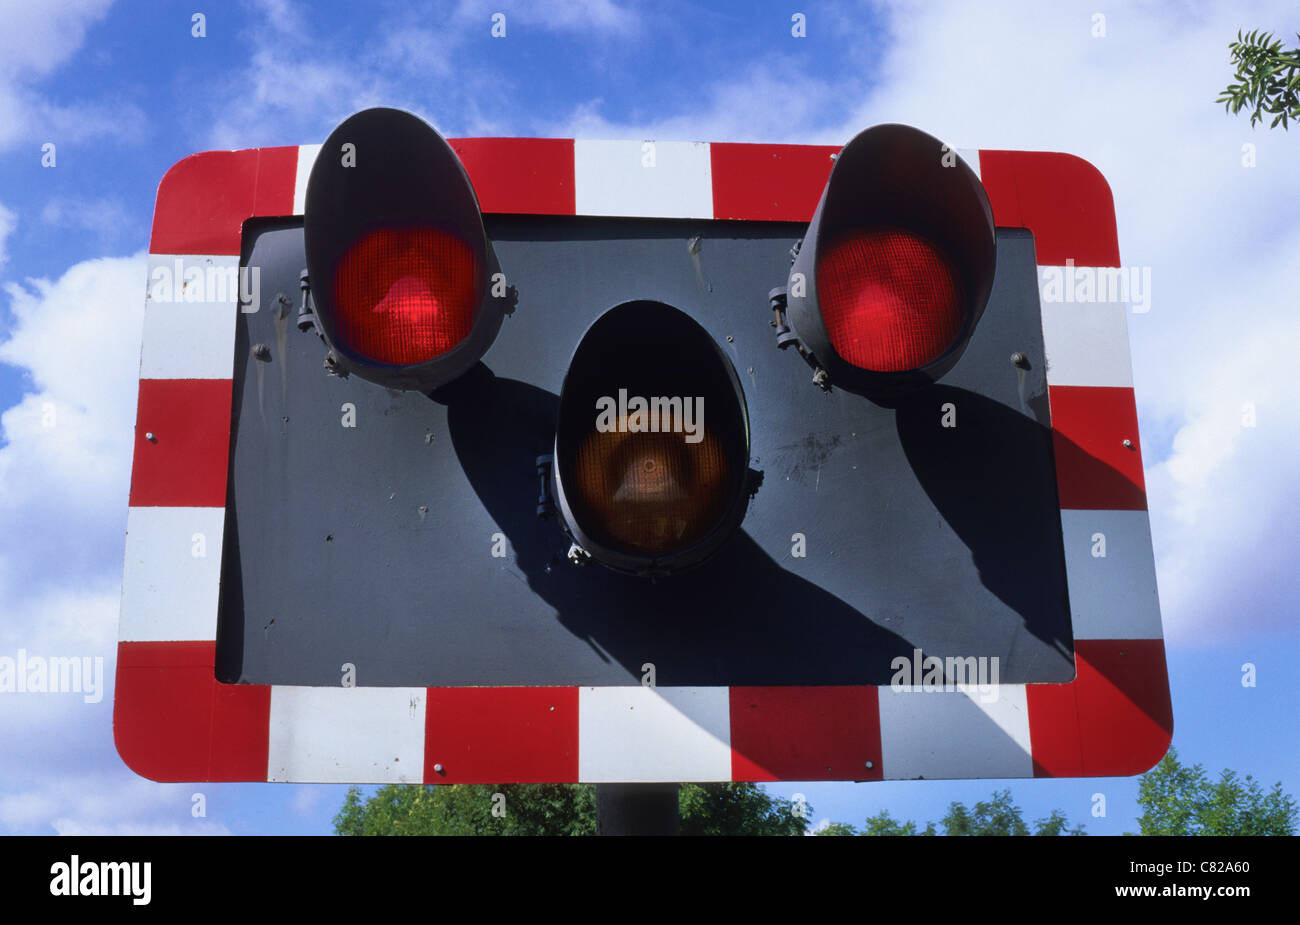 Red Flashing Lights At Railway Level Crossing Warning Of Approaching Train Near Leeds Yorkshire Uk Stock Photo Alamy